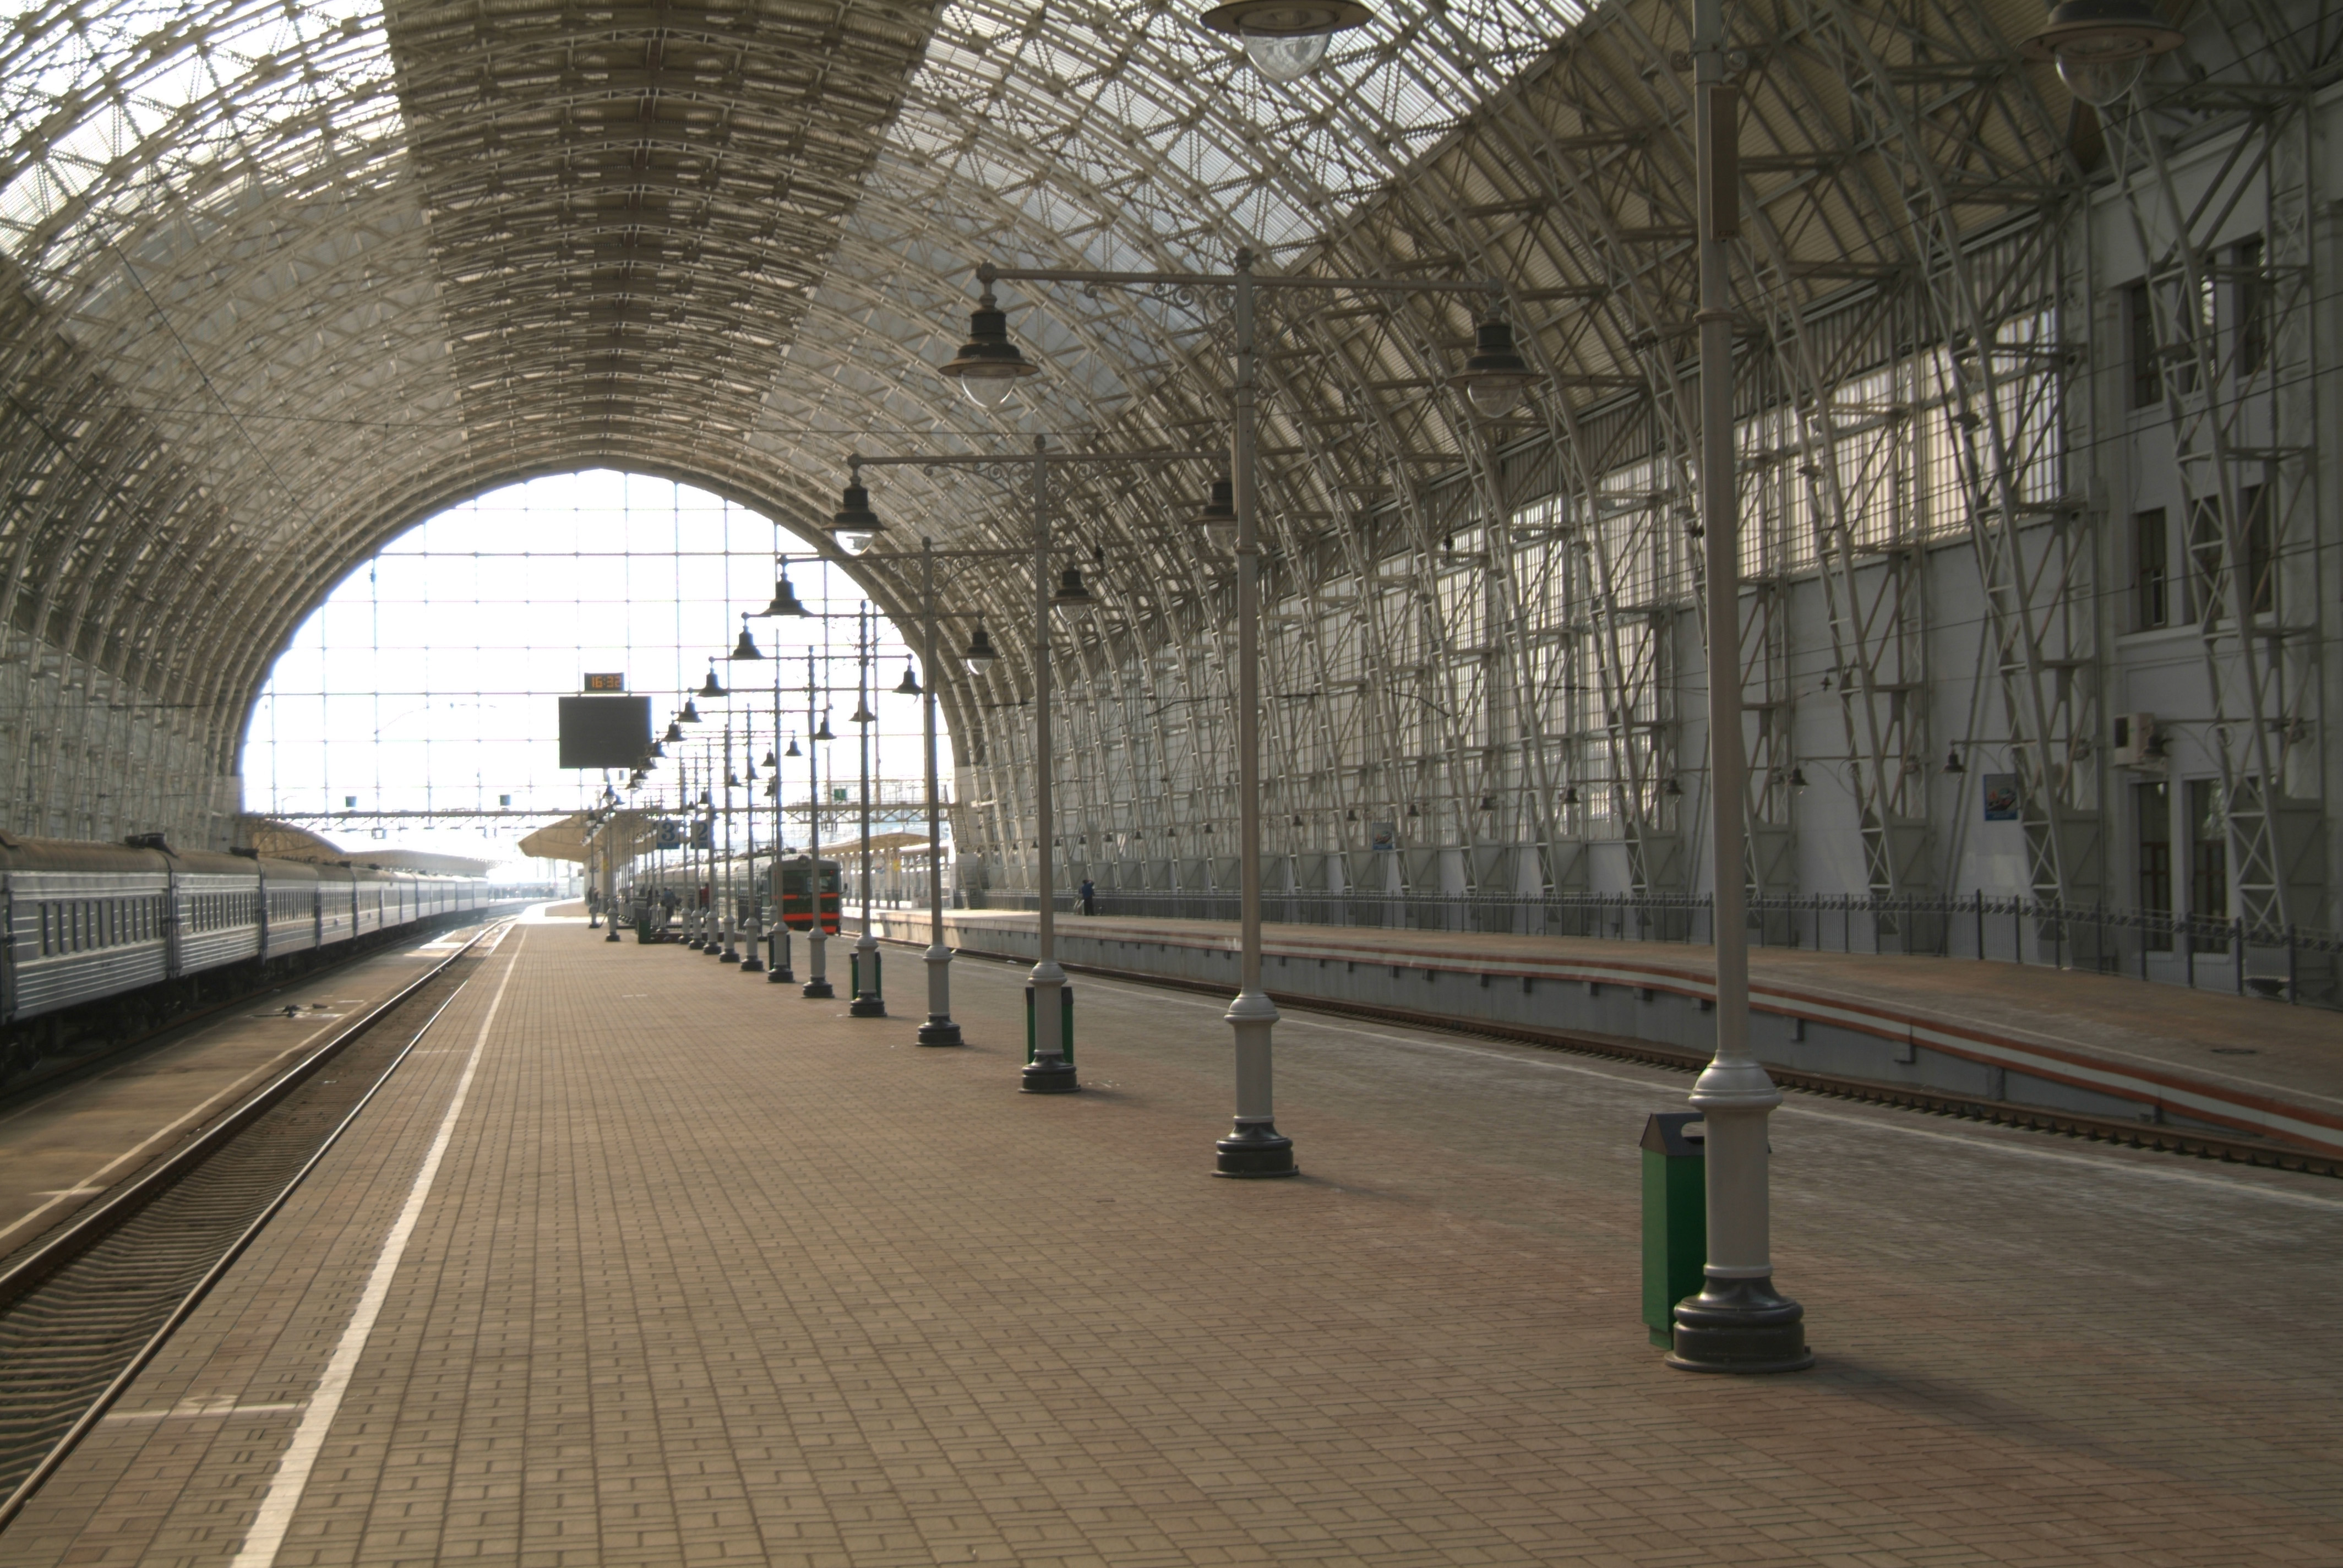 Train Station by mjranum-stock on DeviantArt